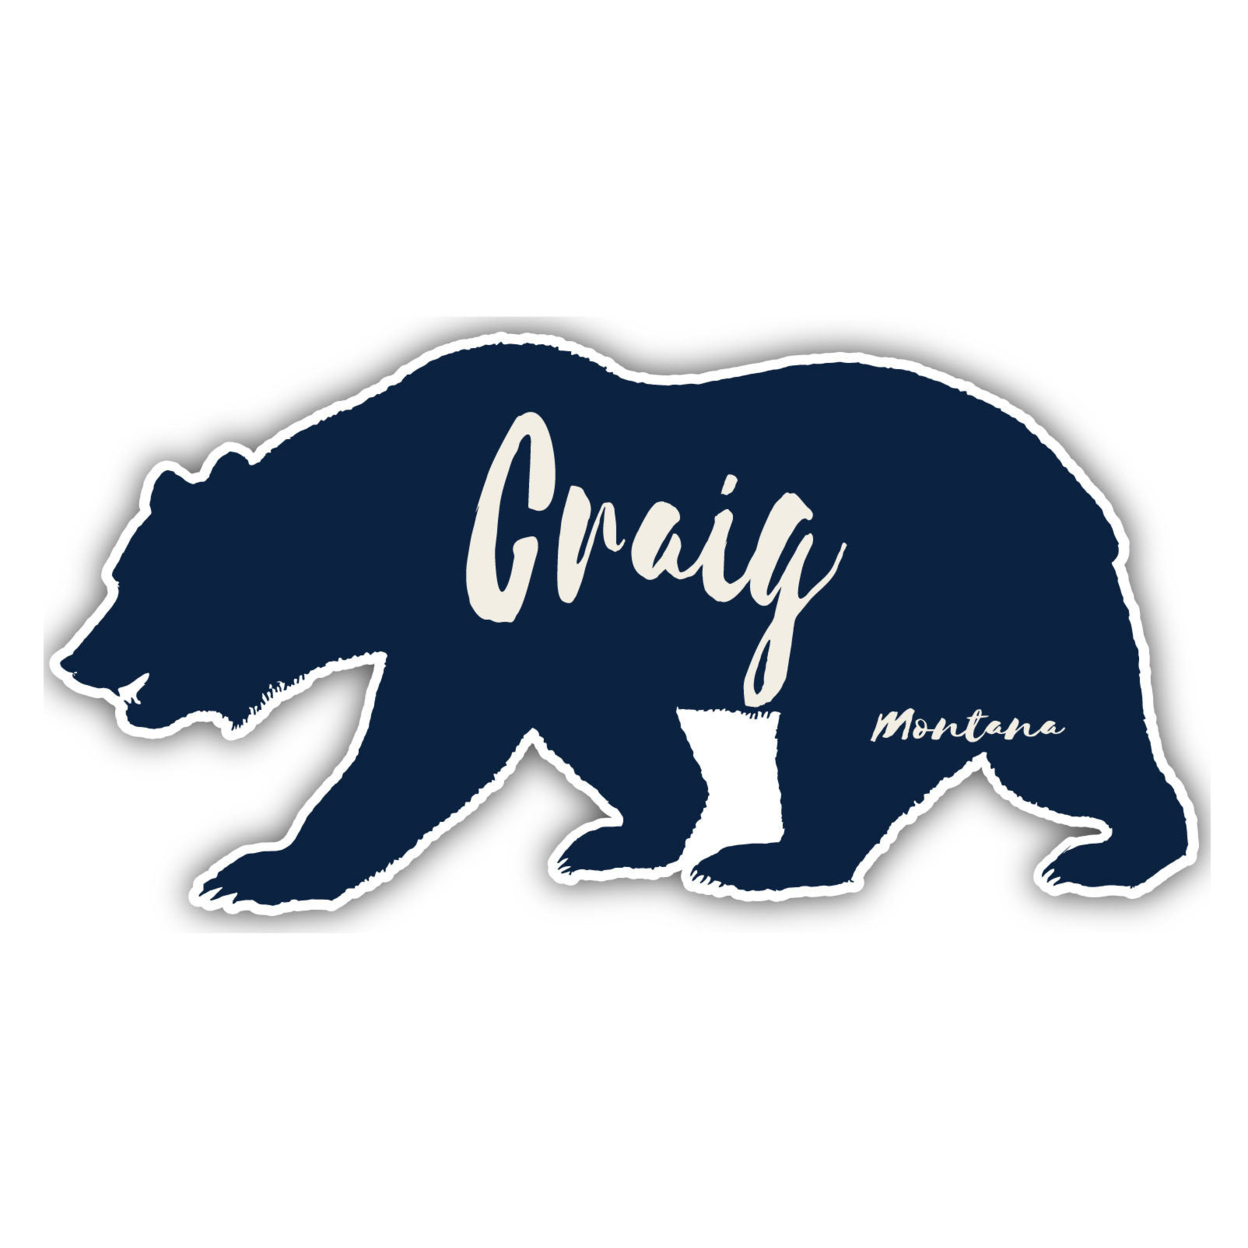 Craig Montana Souvenir Decorative Stickers (Choose Theme And Size) - Single Unit, 6-Inch, Bear